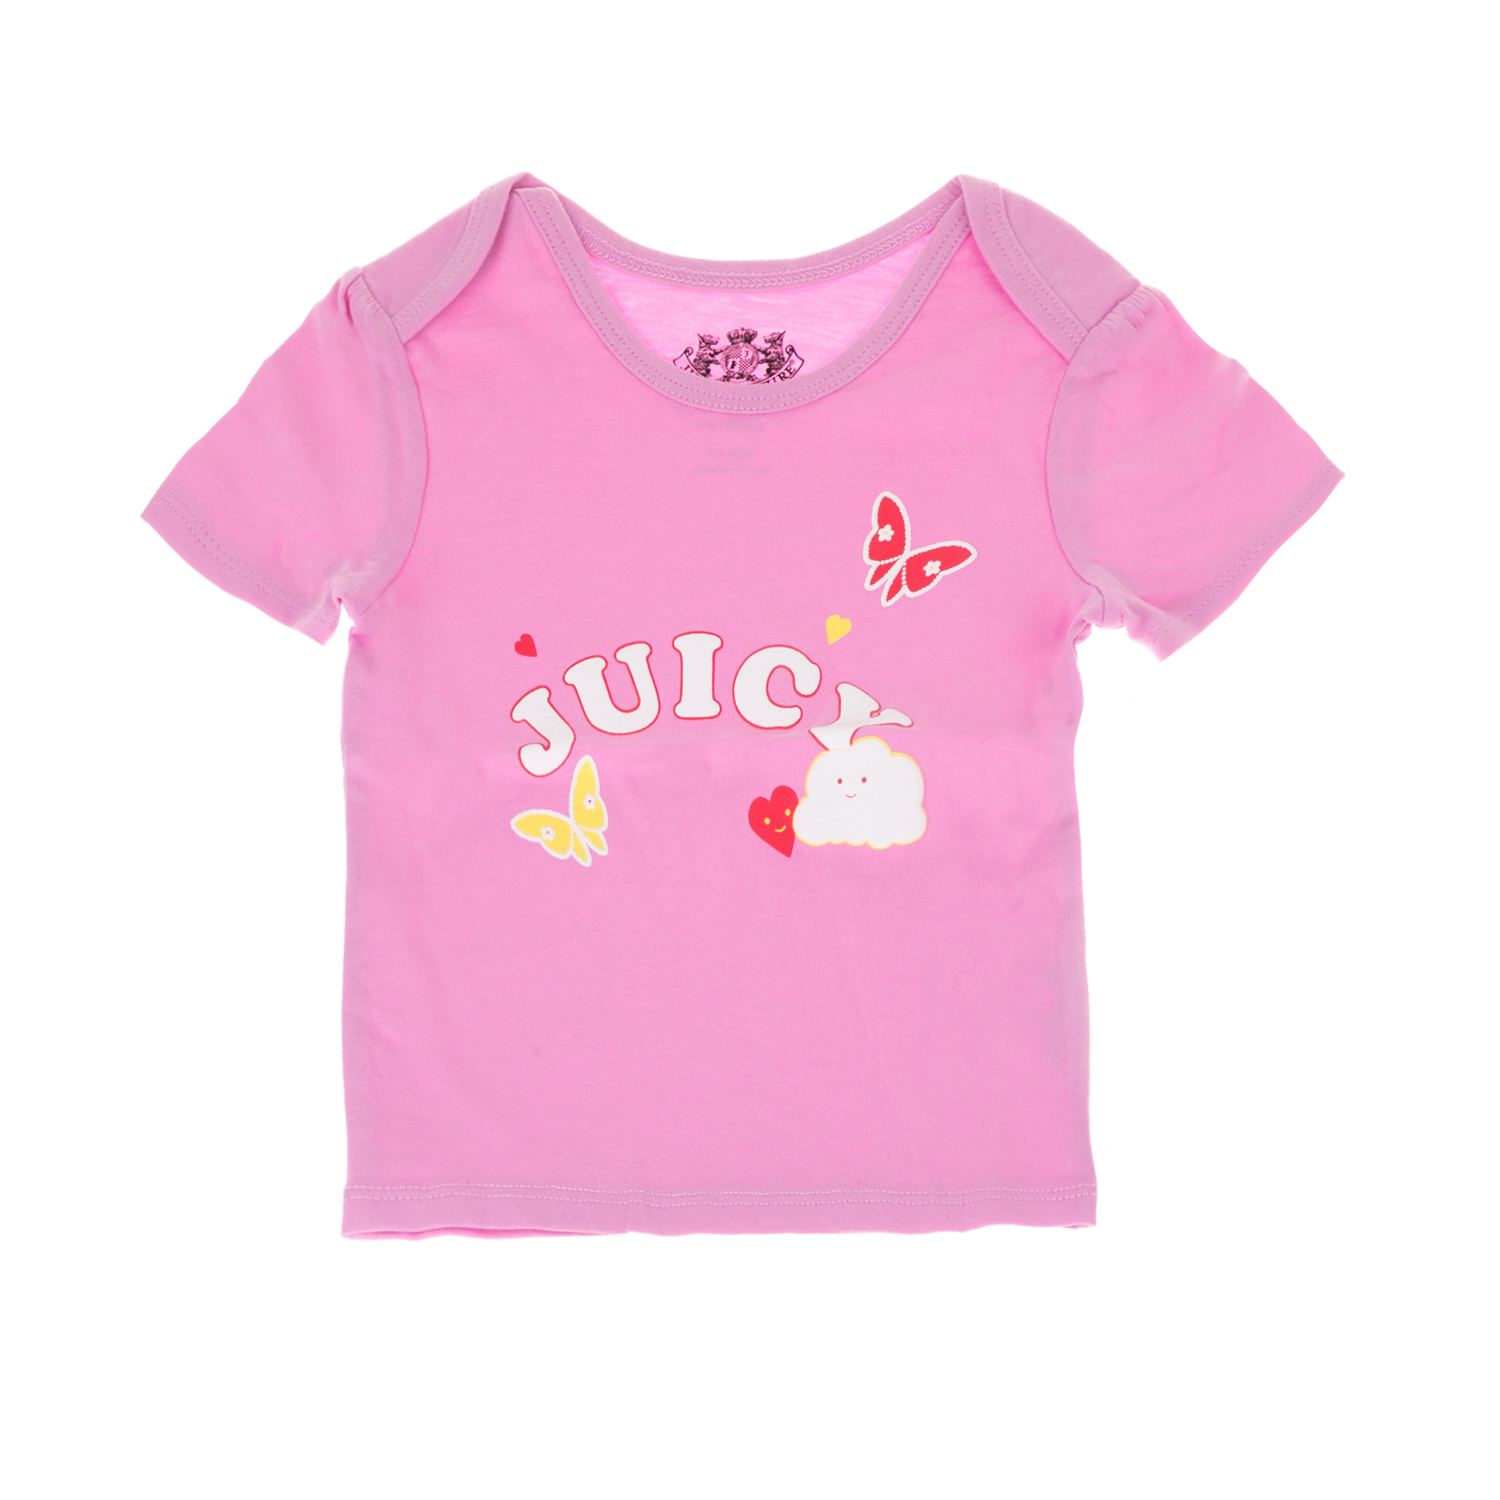 JUICY COUTURE KIDS - Βρεφικό t-shirt JUICY COUTURE KIDS RAINBOW LOVE ροζ Παιδικά/Baby/Ρούχα/Μπλούζες